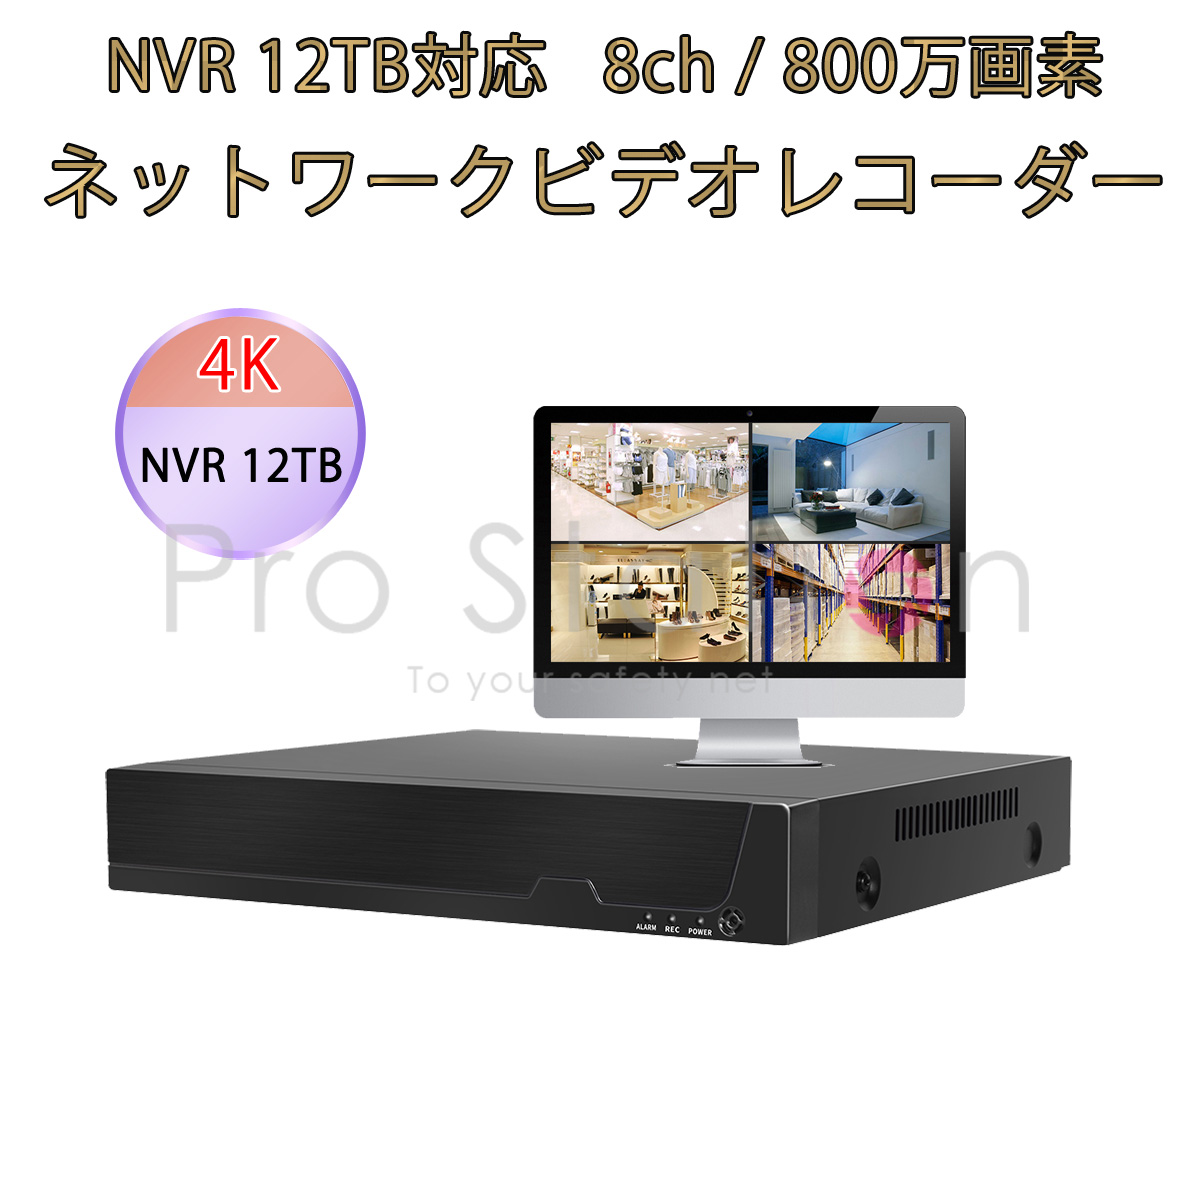 NVR ネットワークビデオレコーダー 8ch IP ONVIF形式 スマホ対応 遠隔監視 HDD最大12TB対応 FHD 800万画素カメラ対応 動体検知 同時出力 録音対応 H.265 IPカメラレコーダー監視システム PSE認証 6ヶ月保証